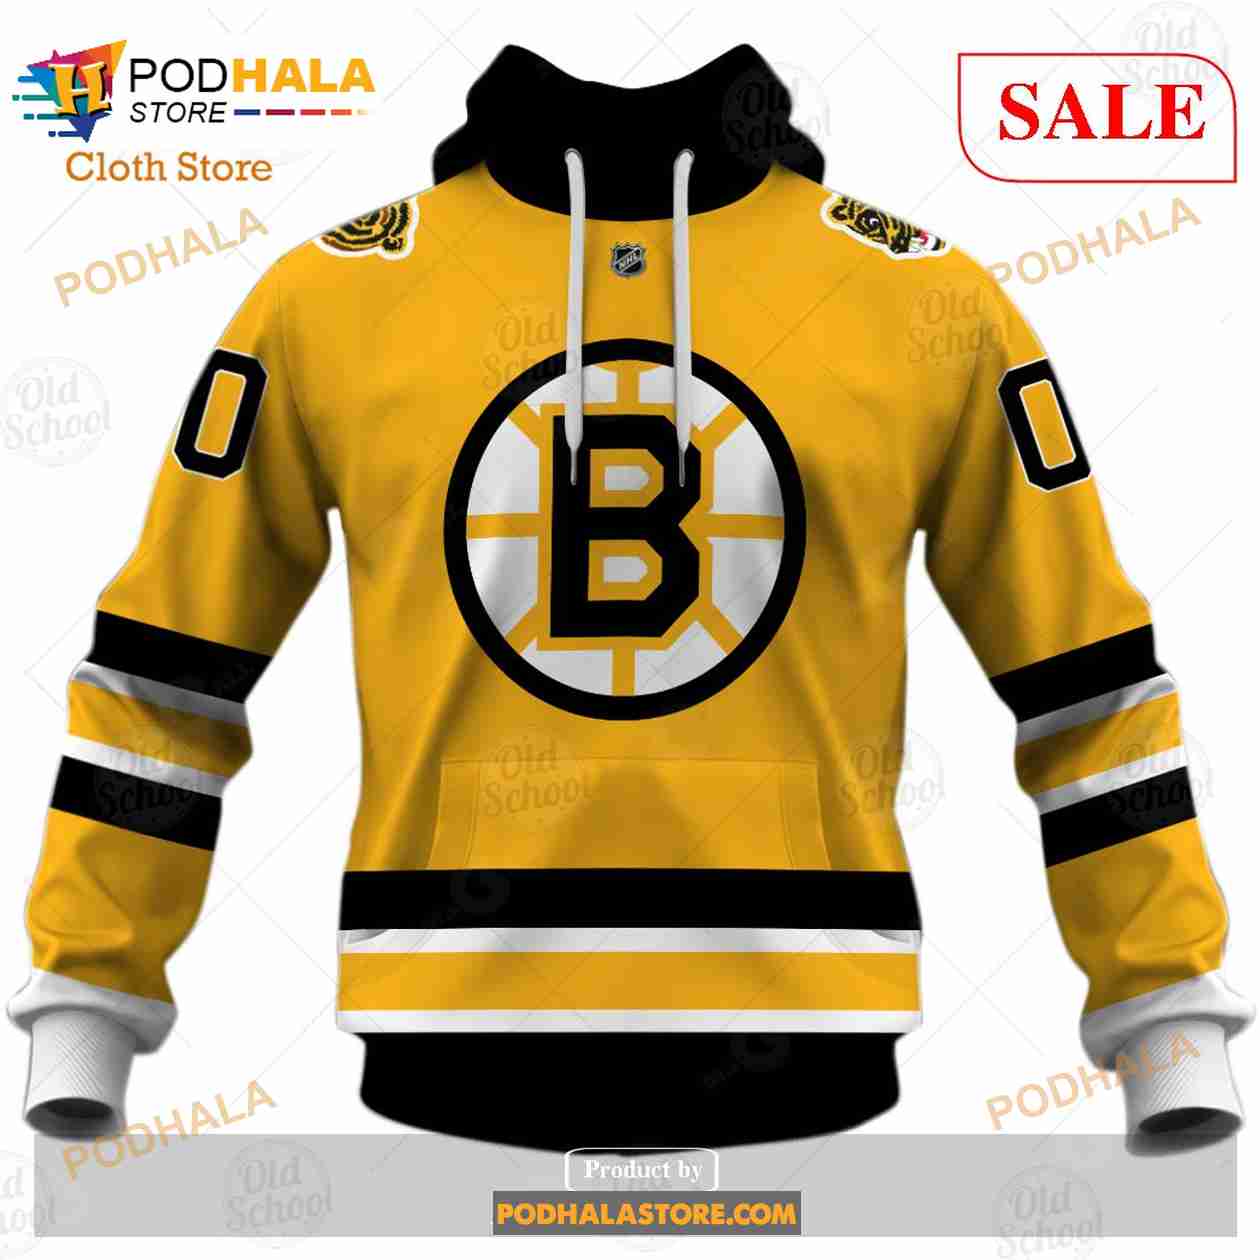 Boston Bruins Pooh Bear Vintage NHL Crewneck Sweatshirt Gold / XL